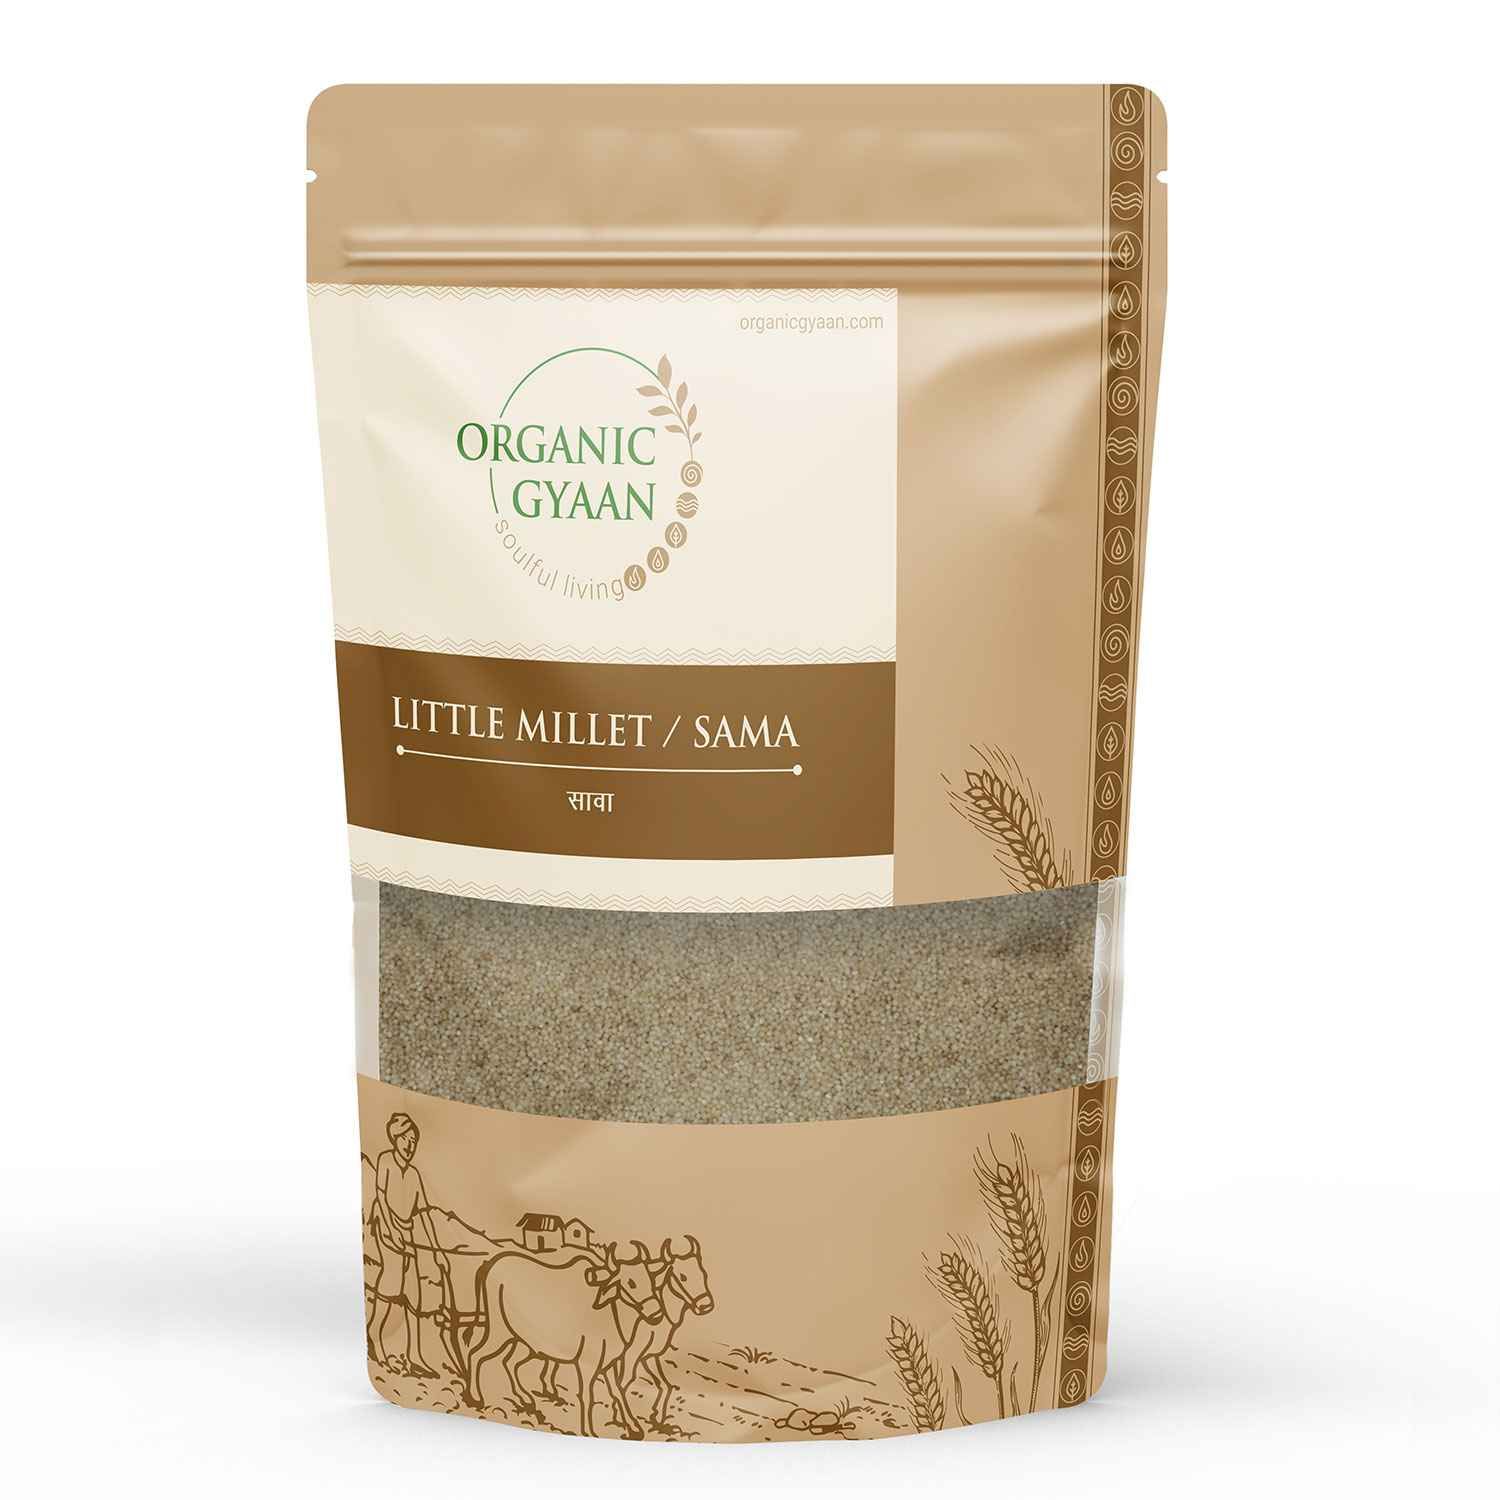 Organic Gyaan Organic Little Millet / Sama 450gm